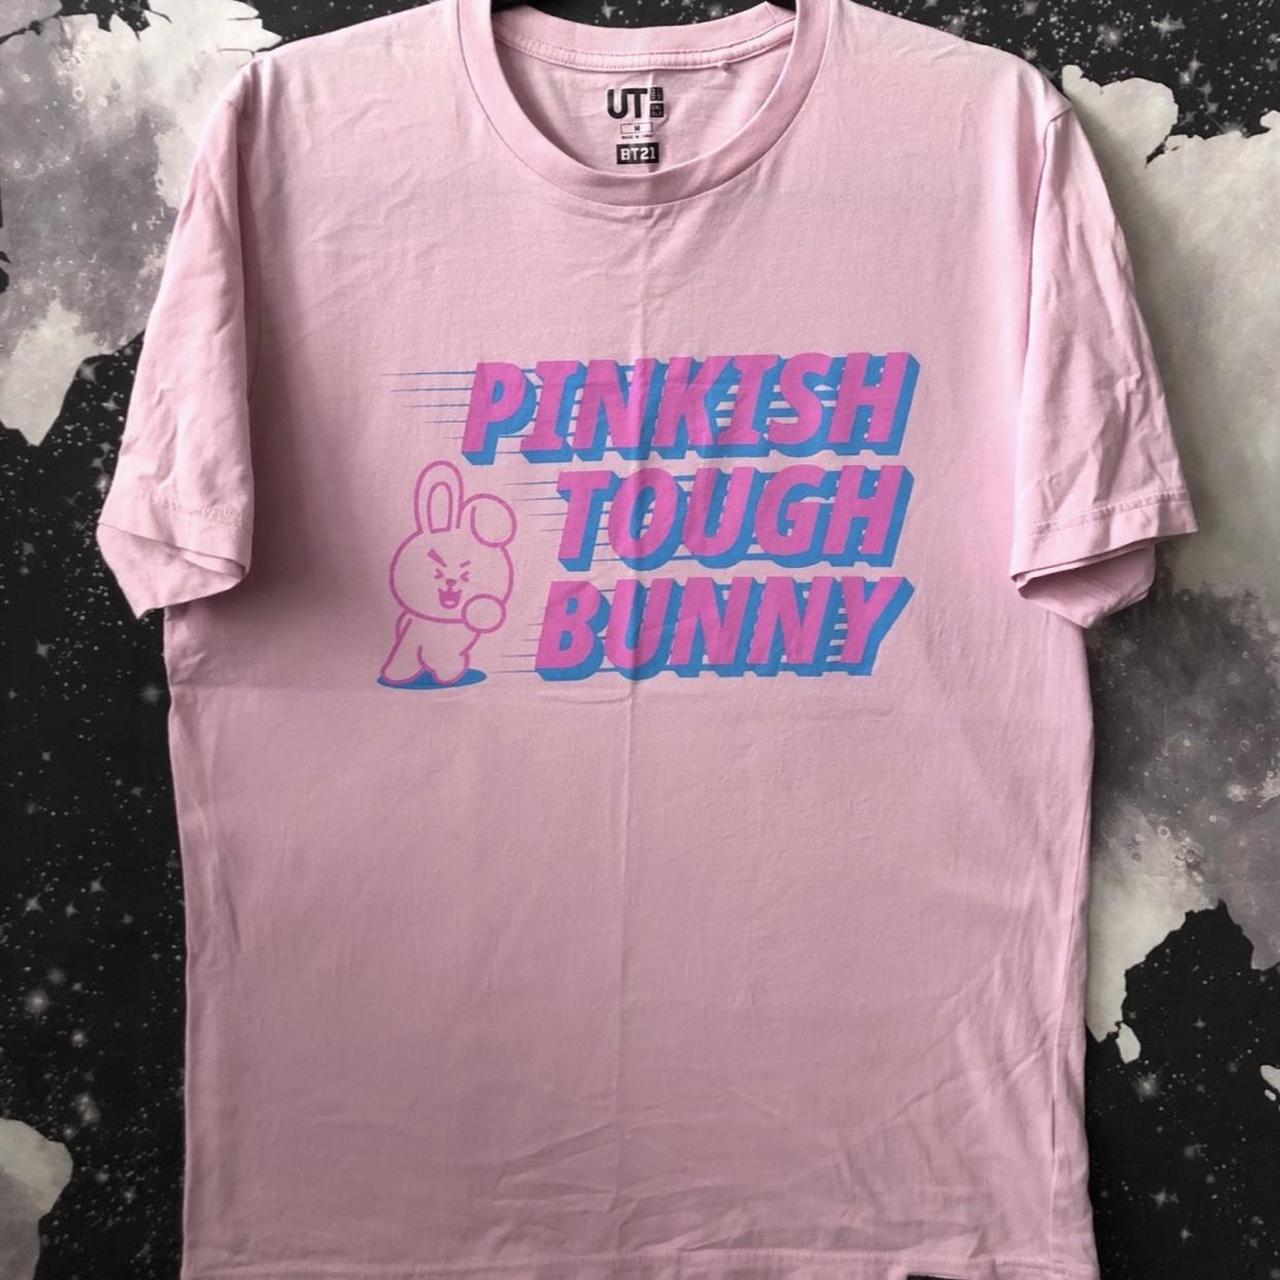 Uniqlo BT21 Pinkish Tough Bunny shirt, color is pink... - Depop